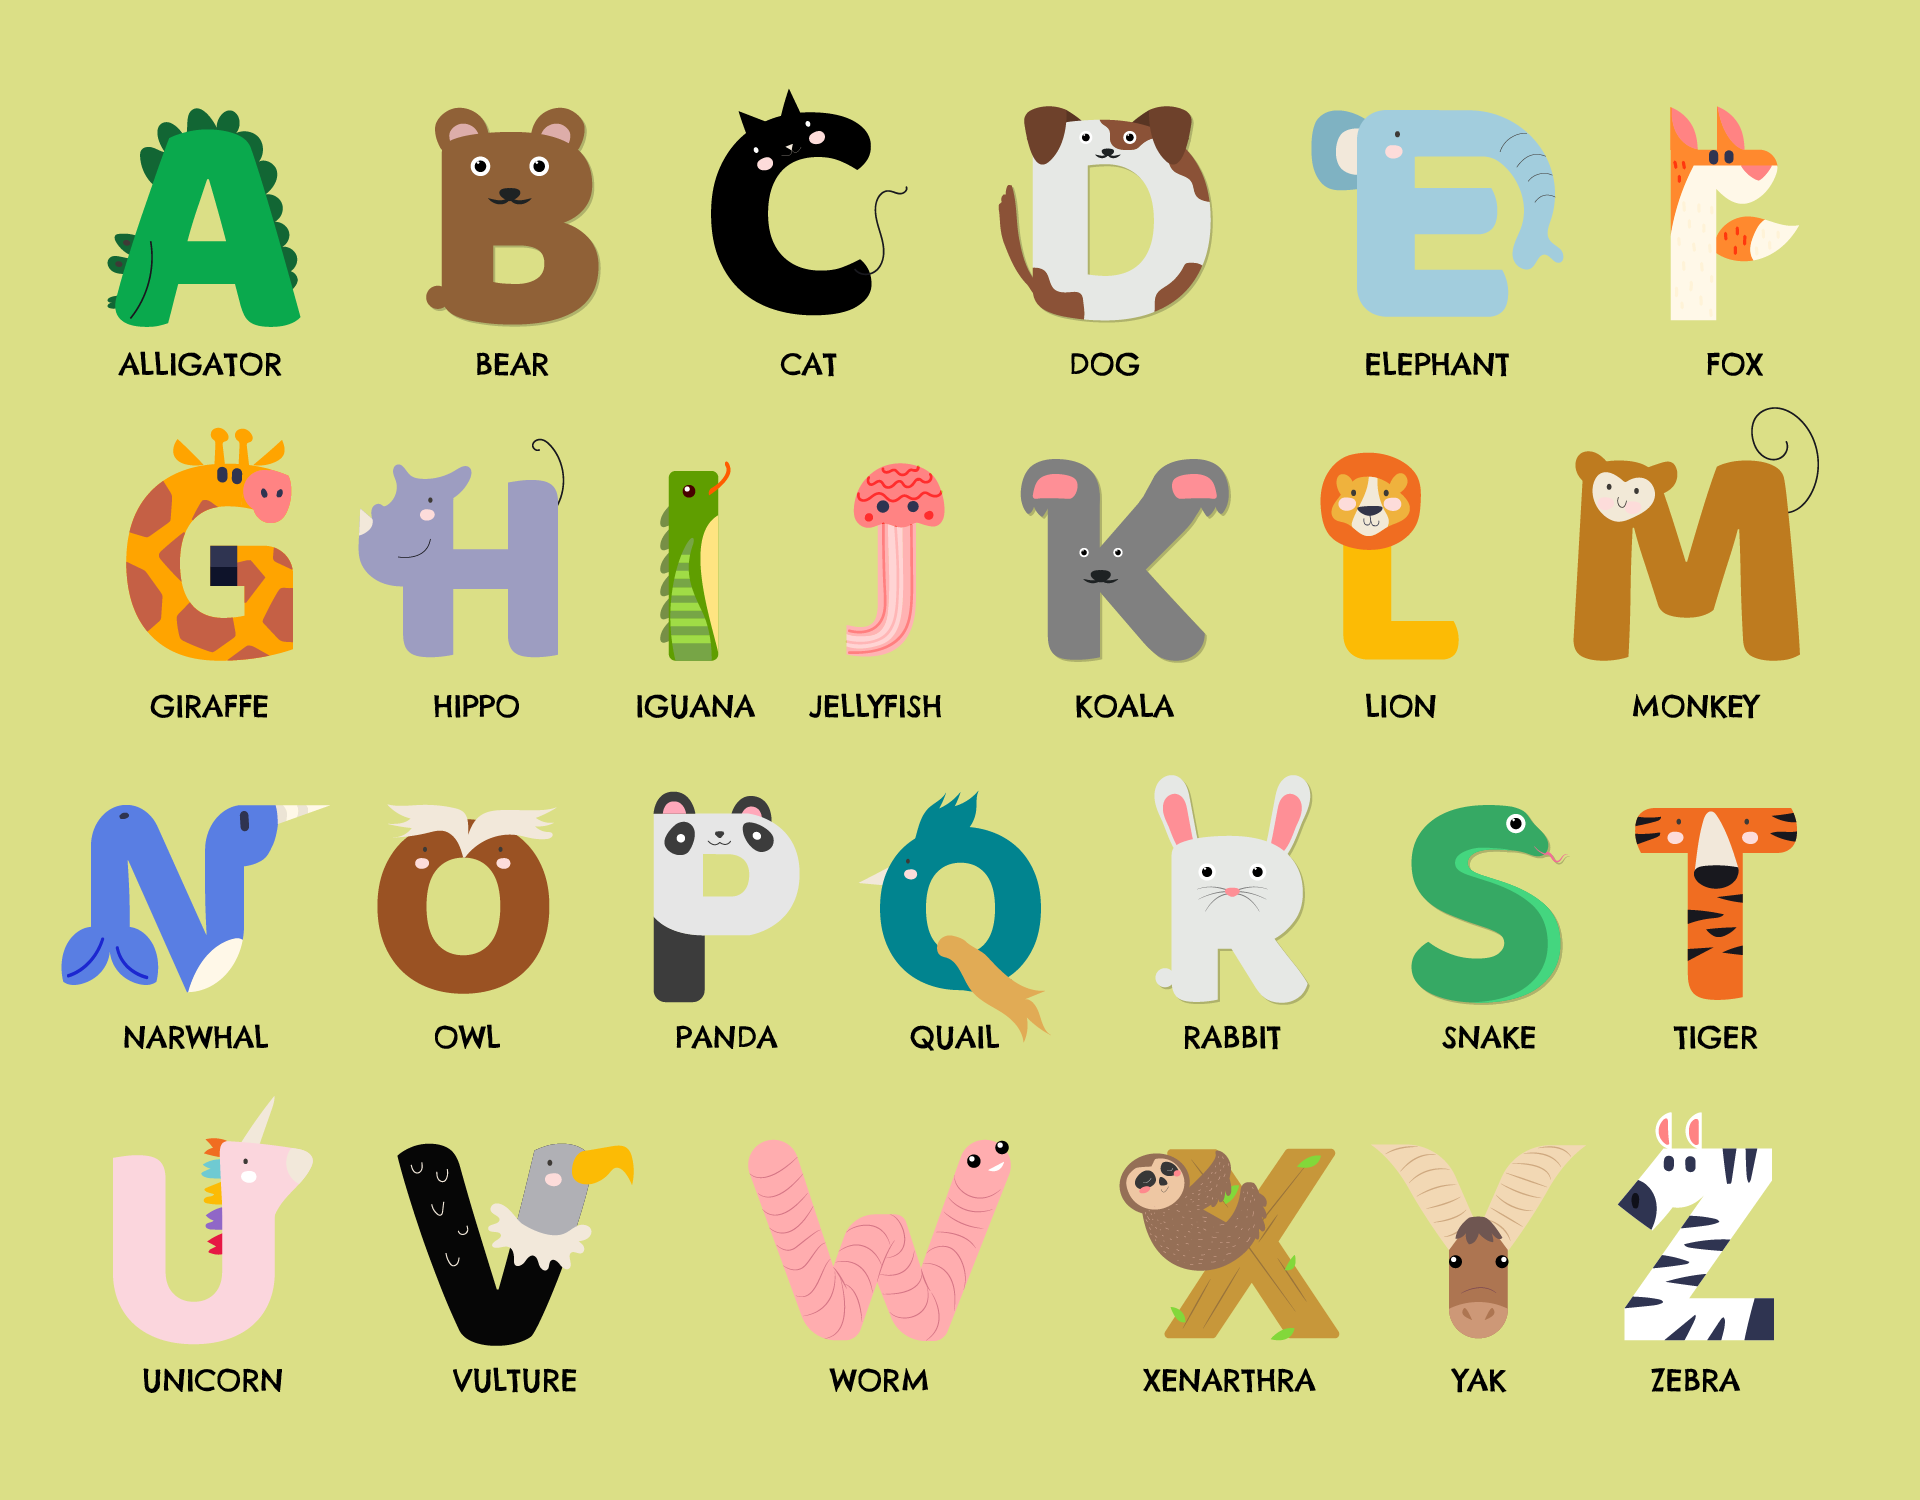 colorful-abc-alphabet-flashcard-for-kindergarten-kids